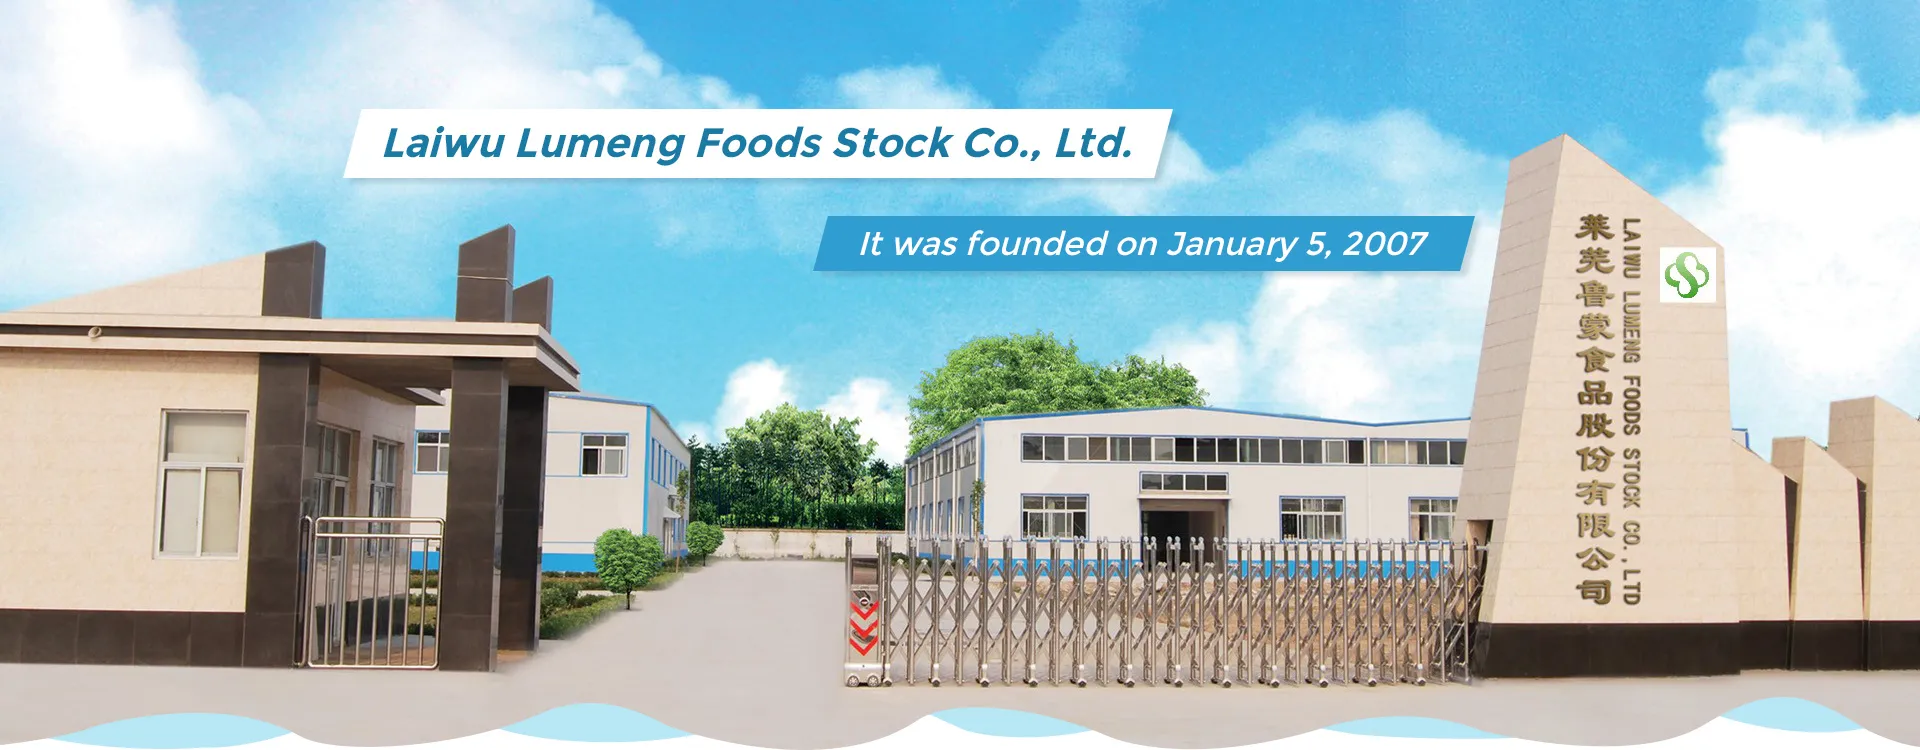 LAIWU LUMENG FOODS STOCK CO.、株式会社